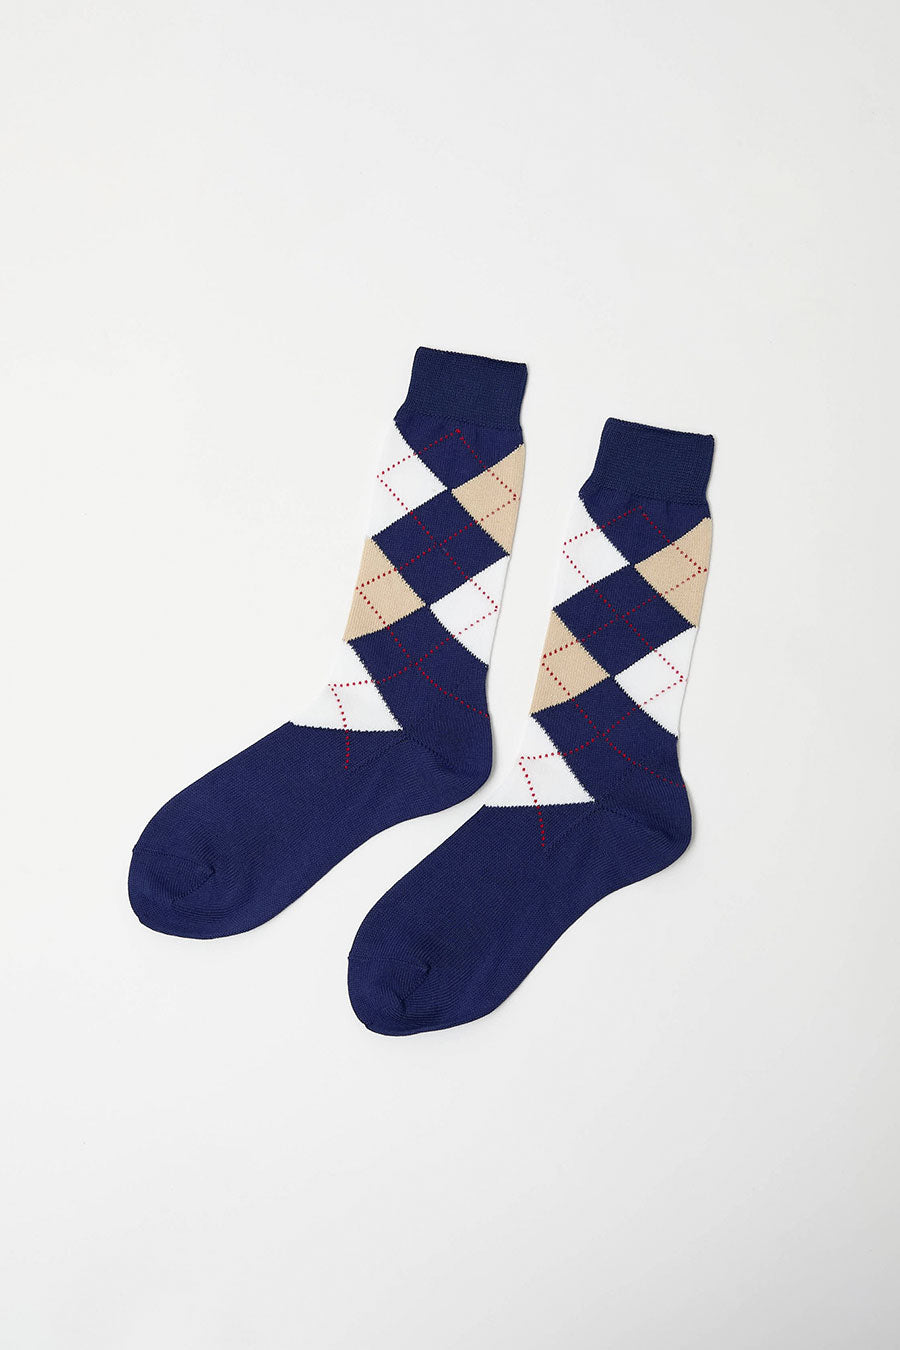 Maria La Rosa Argyle Socks in Blue